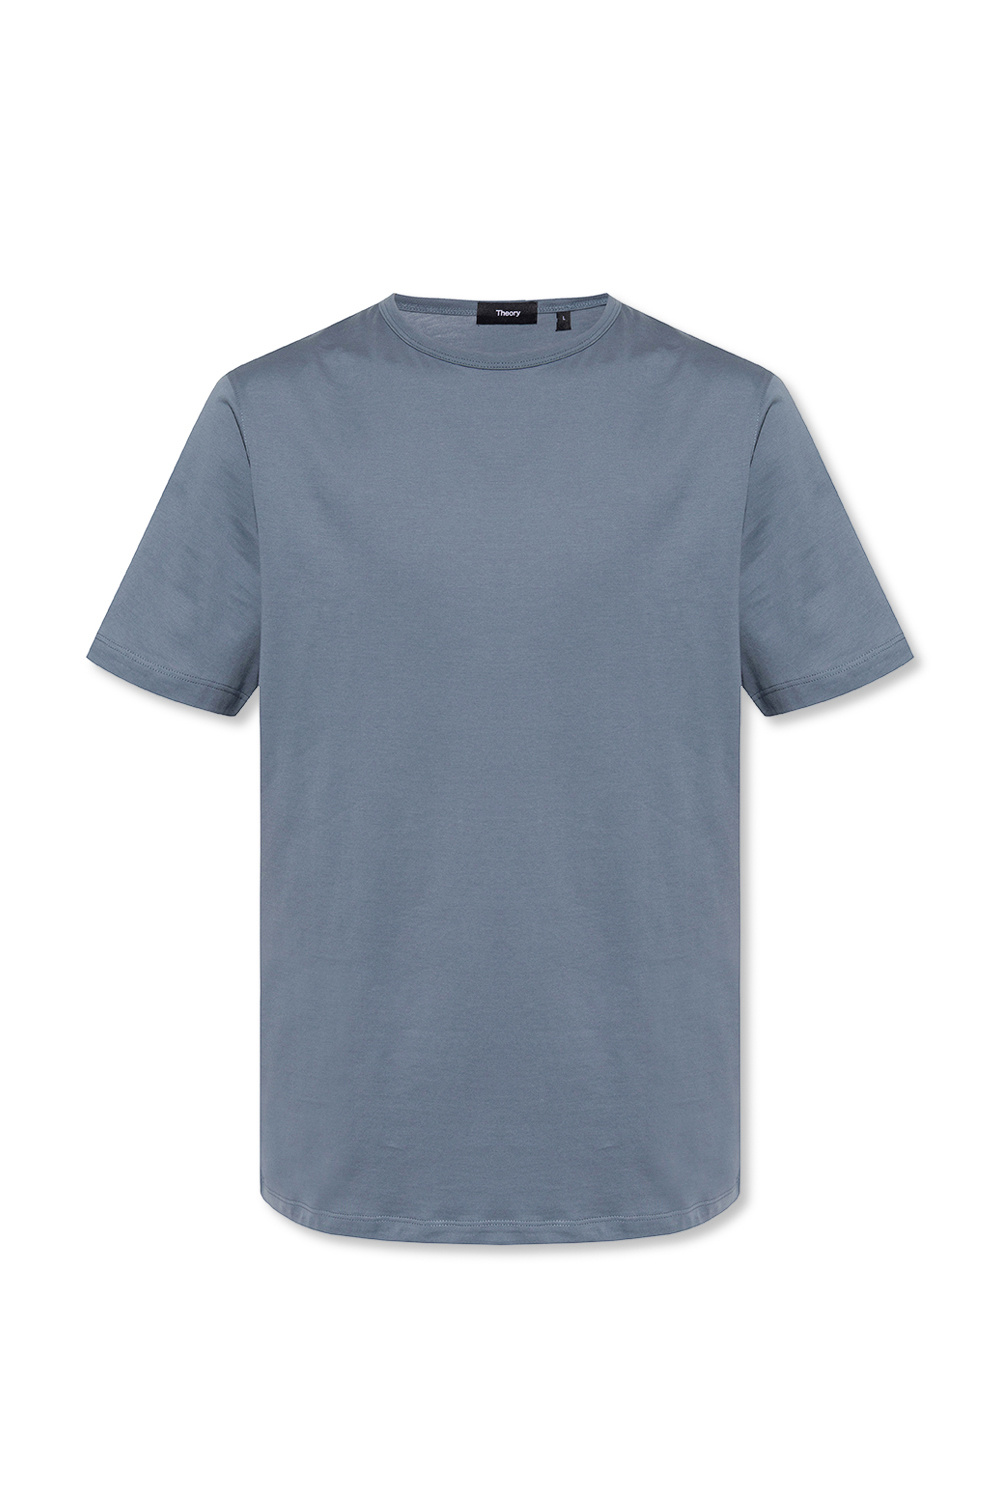 Theory alexandre vauthier Iraq line shirt CamaragrancanariaShops - long Grey item T style Crewneck - shirt -